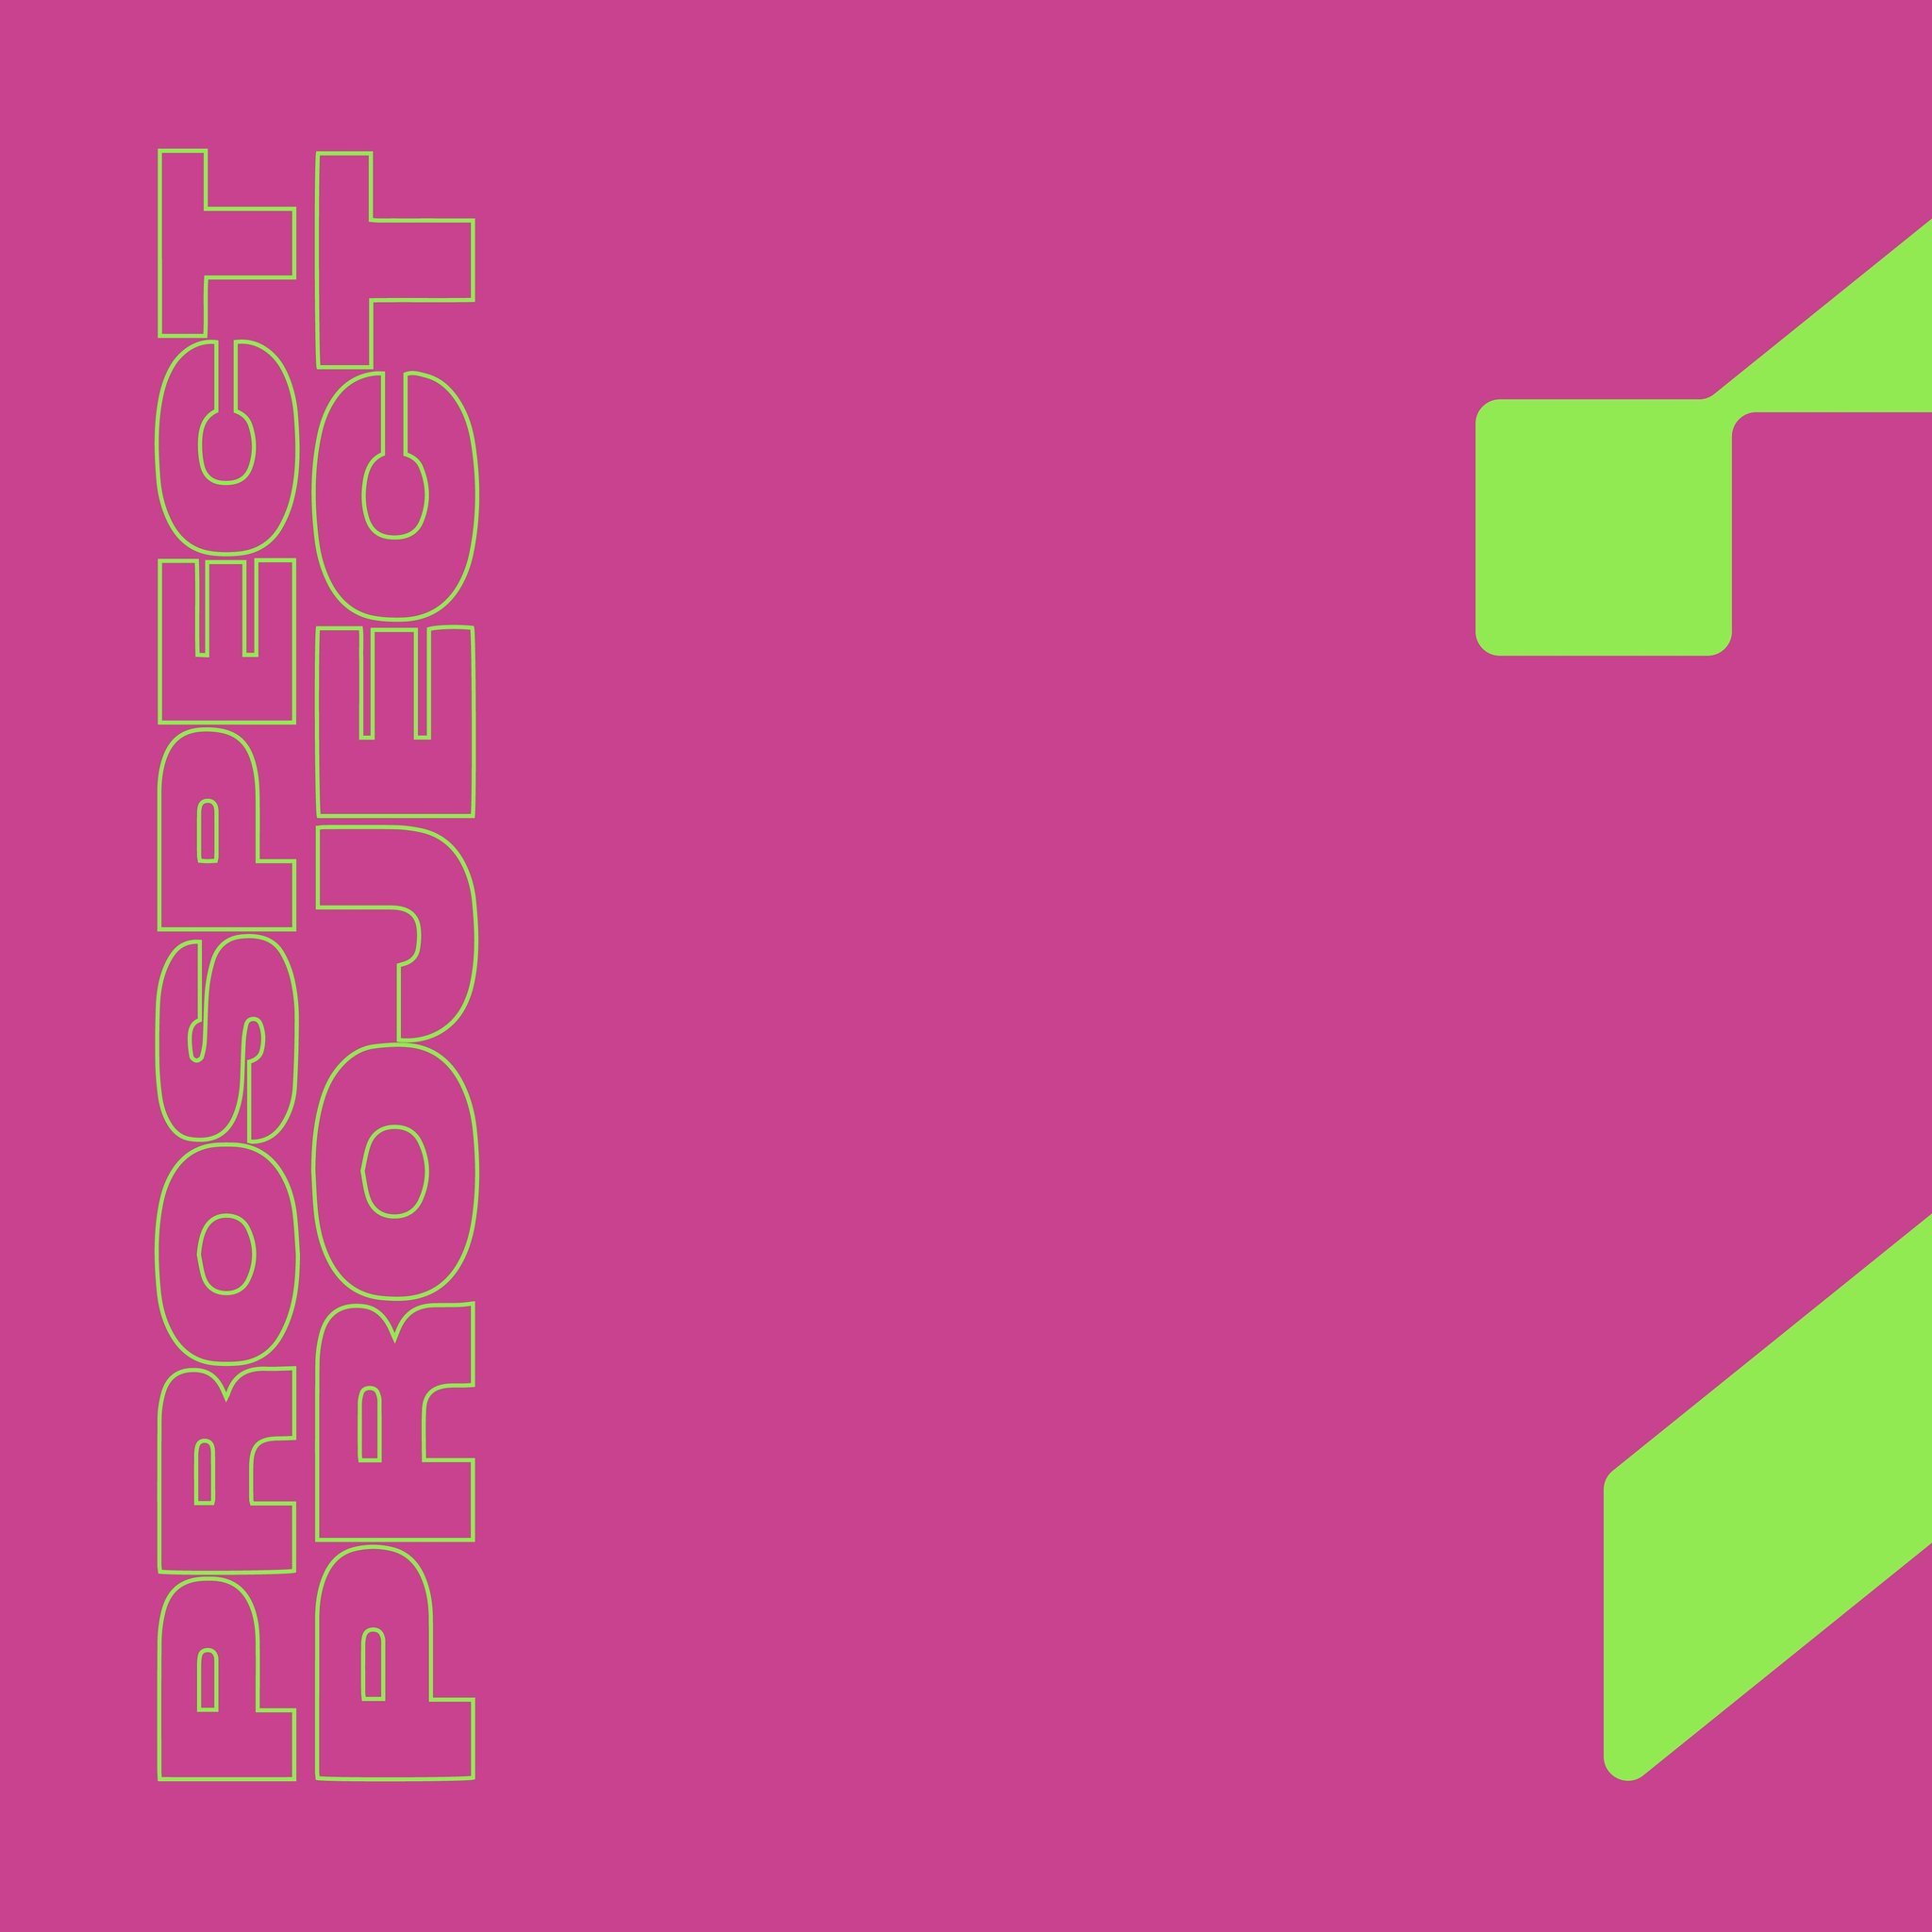 Logo Design for Prospect Project, elite baseball products

#logo #logodesign #branding #brandidentity #graphicdesign #typography #symbol #modernism #power #lwstudios @lwstudios_design